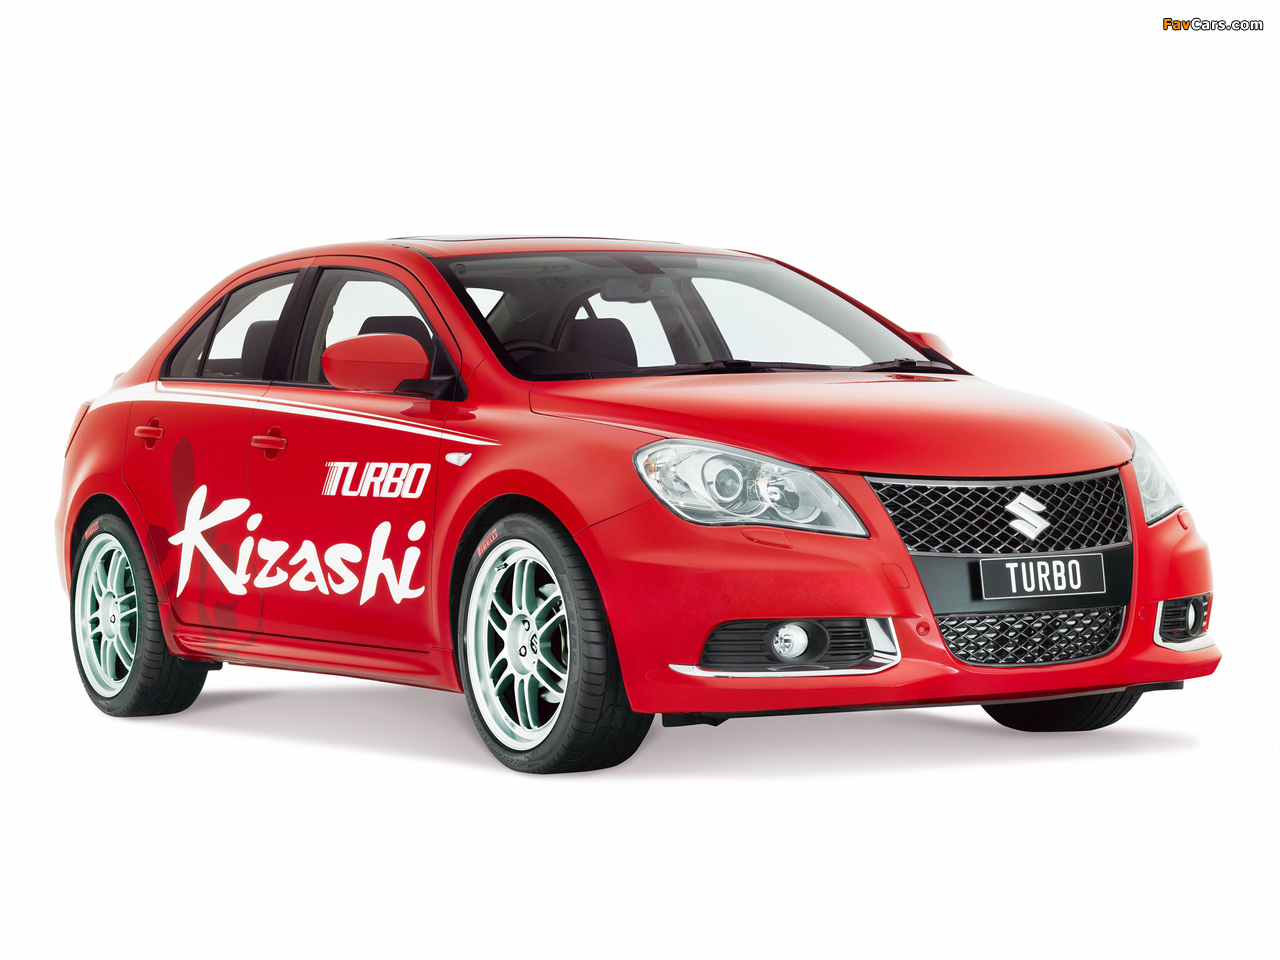 Suzuki Kizashi Turbo Concept 2010 pictures (1280 x 960)